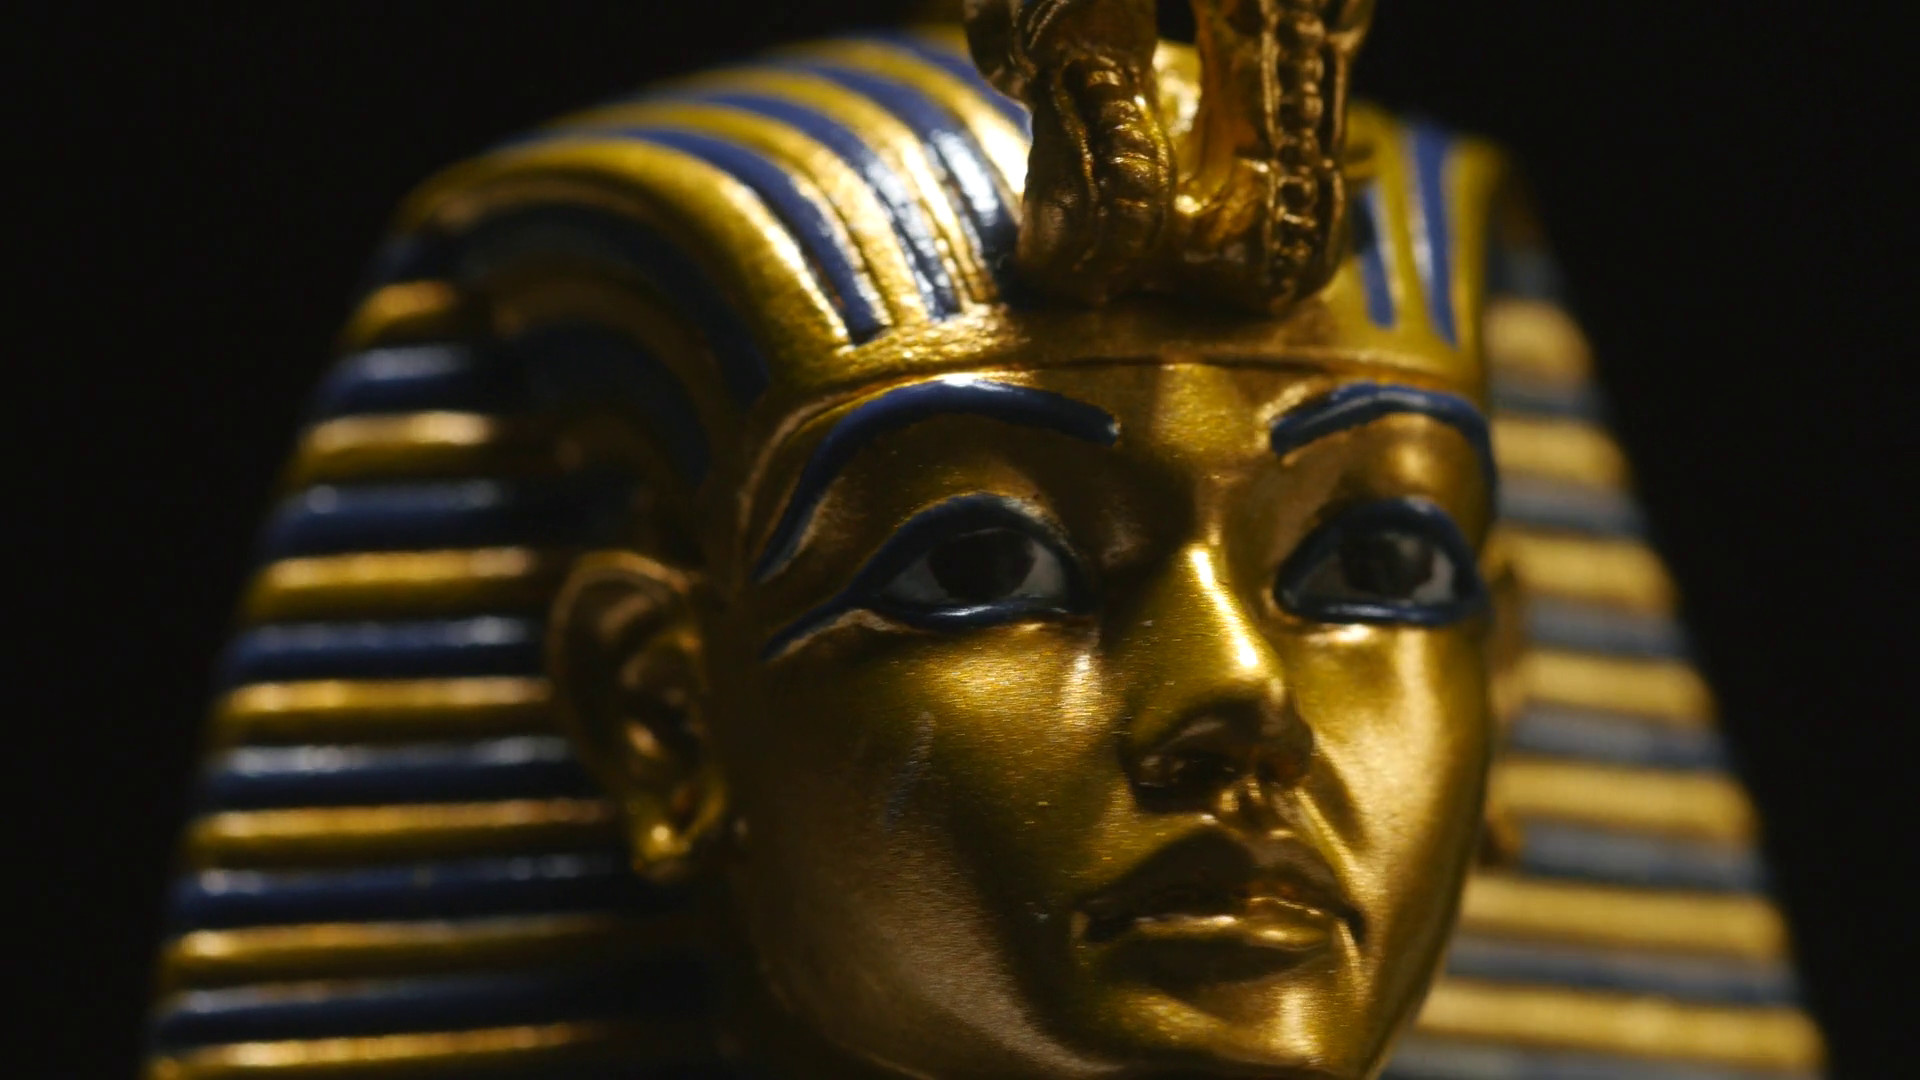 1920x1080 4K Closeup Pharaoh Mask Artifact - Egyptian Archaeology Stock Video Footage  - VideoBlocks